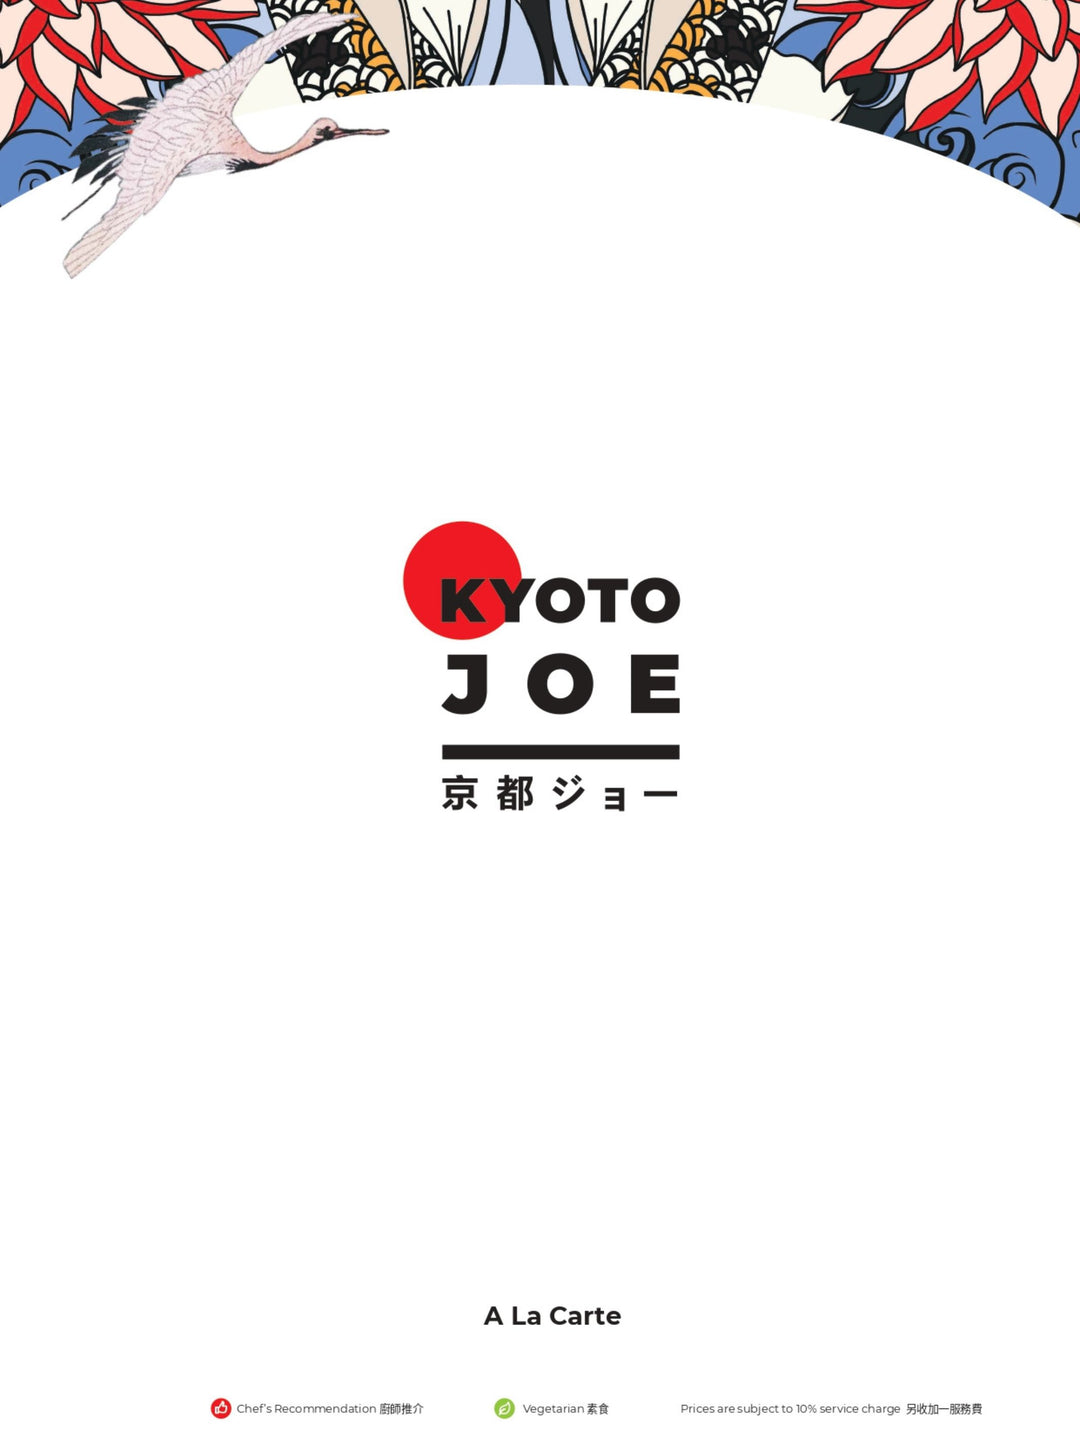 Kyoto Joe À La Carte Menu